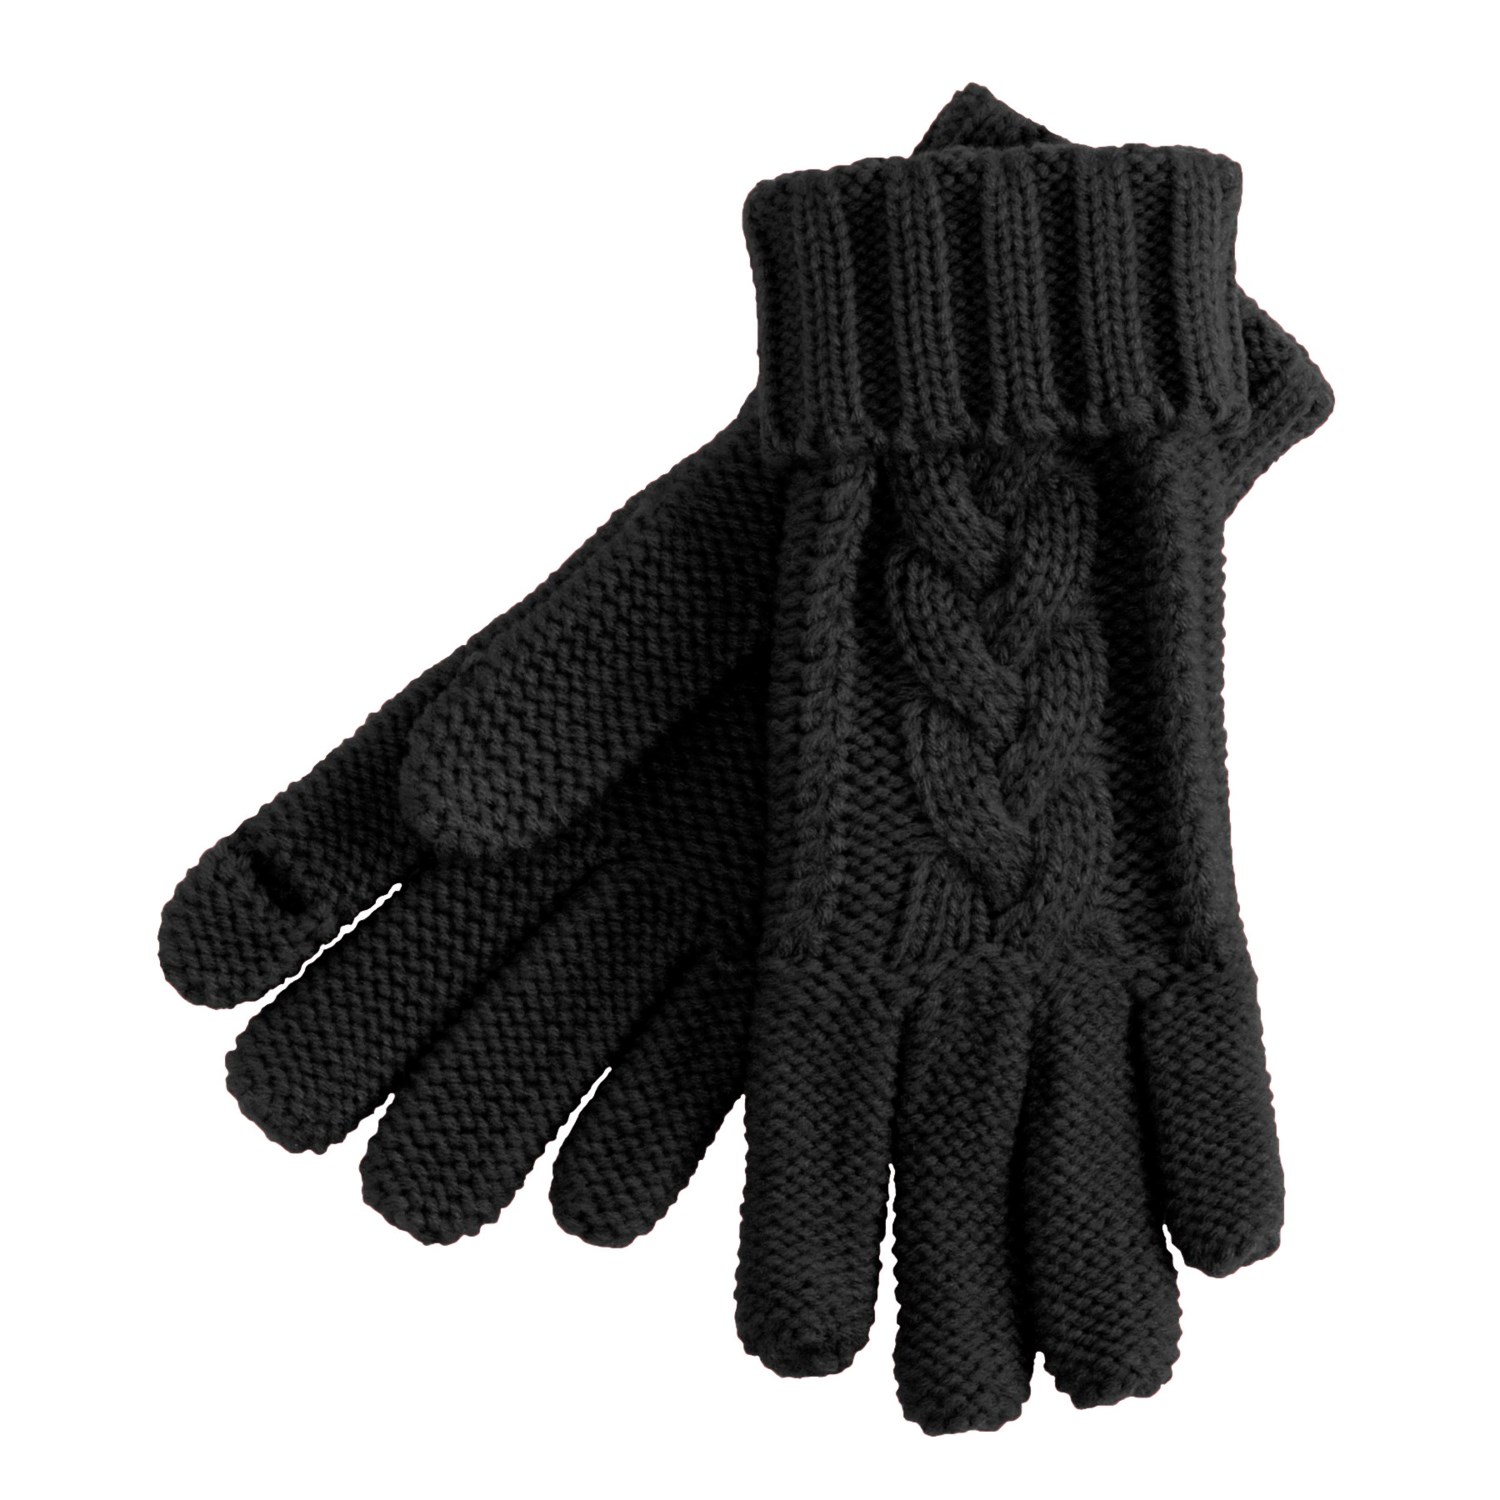 Finger Cut Gloves